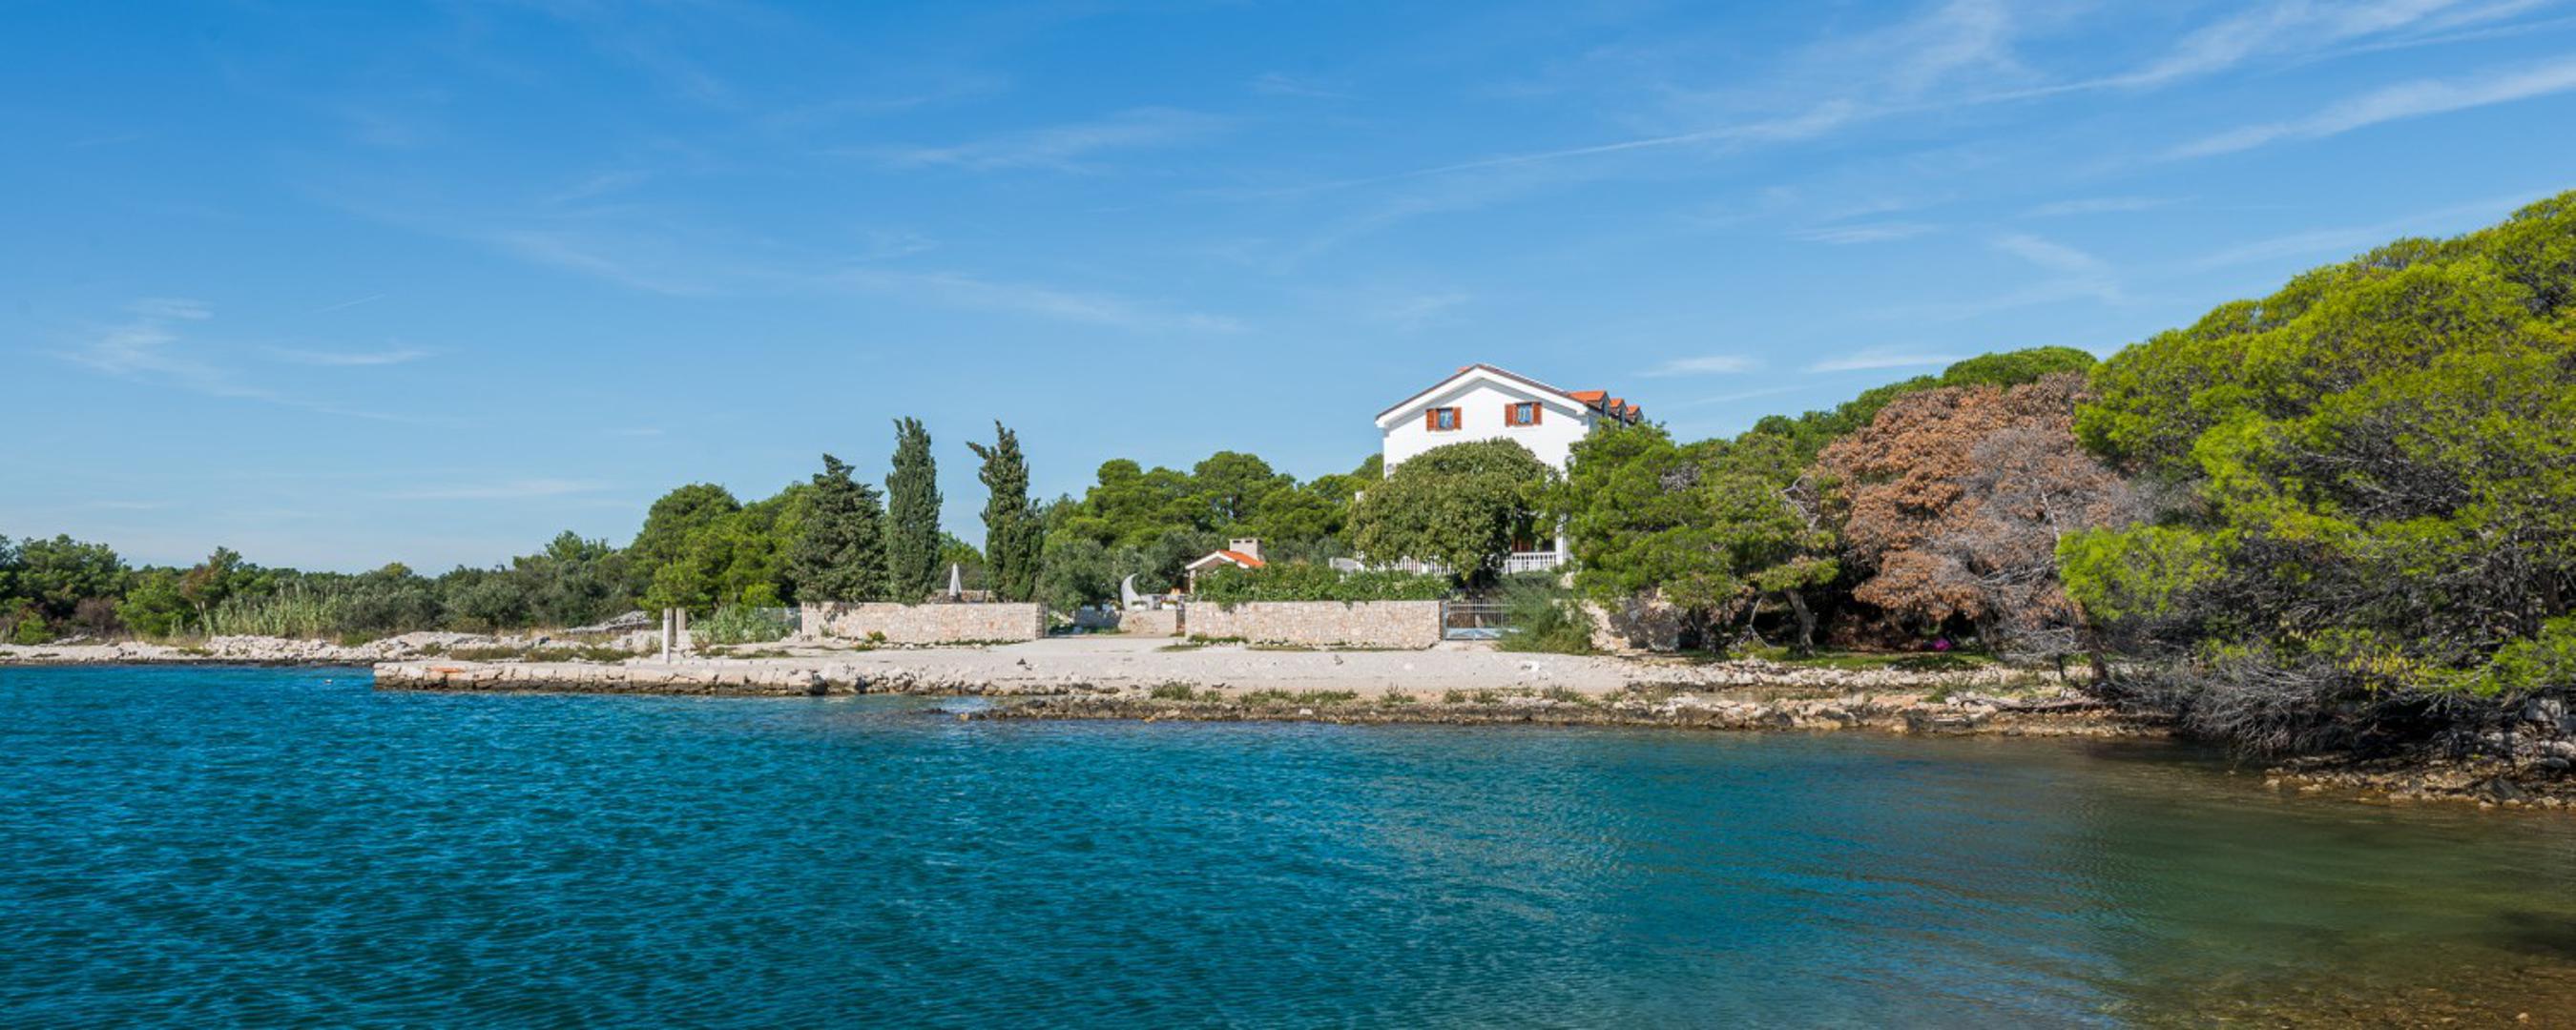 Villa Prosika Tisno